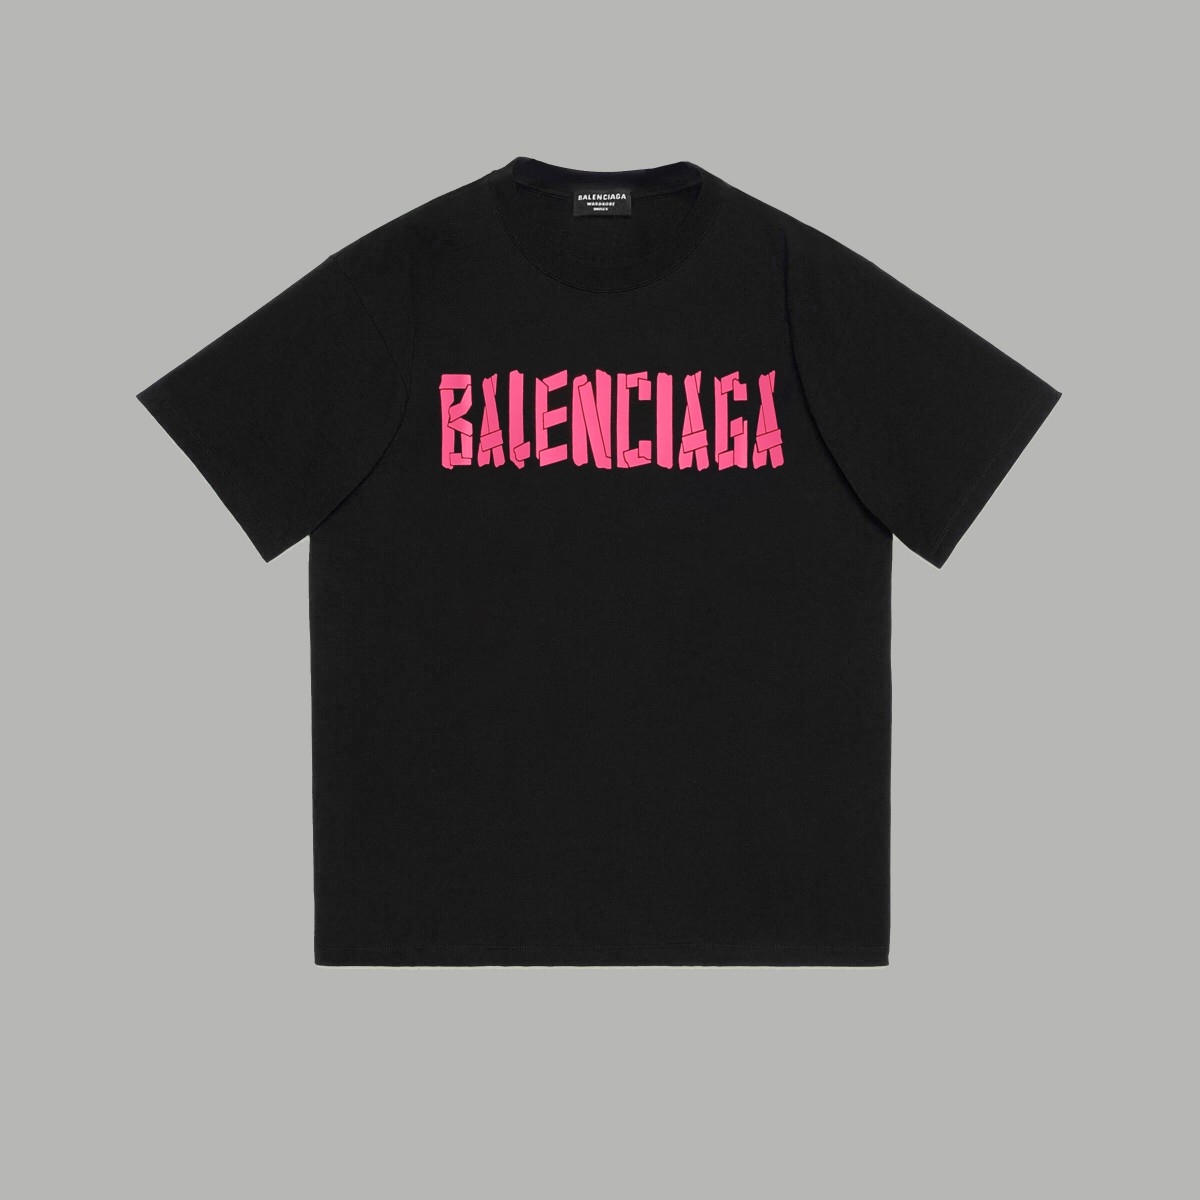 Balenciaga Clothing T-Shirt Hot Sale
 Pink Printing Unisex Cotton Spring/Summer Collection Short Sleeve